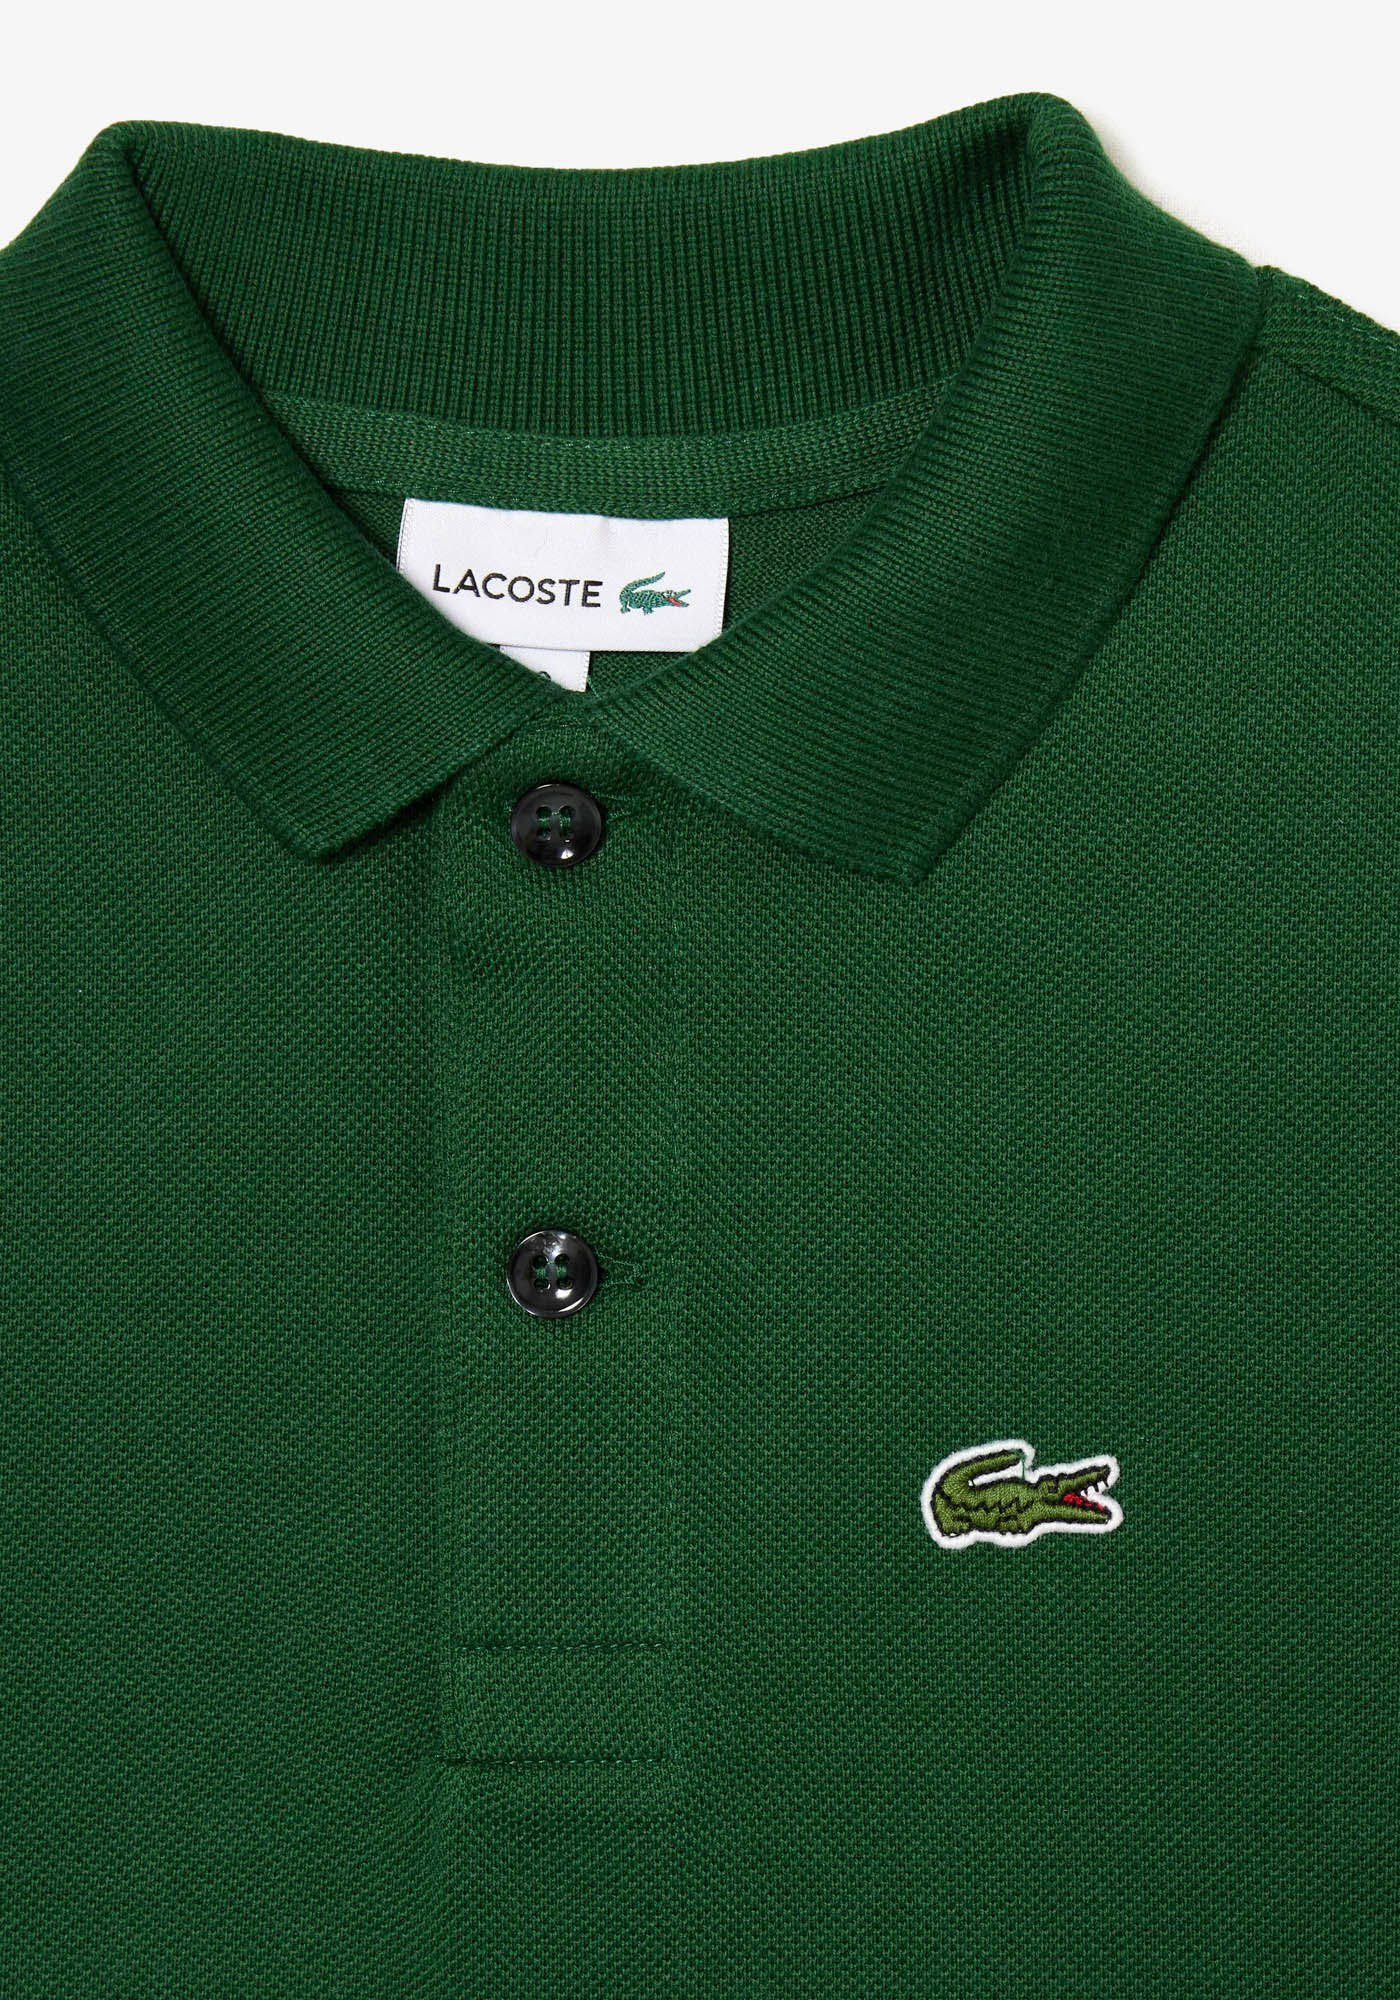 Lacoste grün Kids Kroko Kinder Kids Polo mit MiniMe,Junior, Junior Poloshirt aufgesticktem